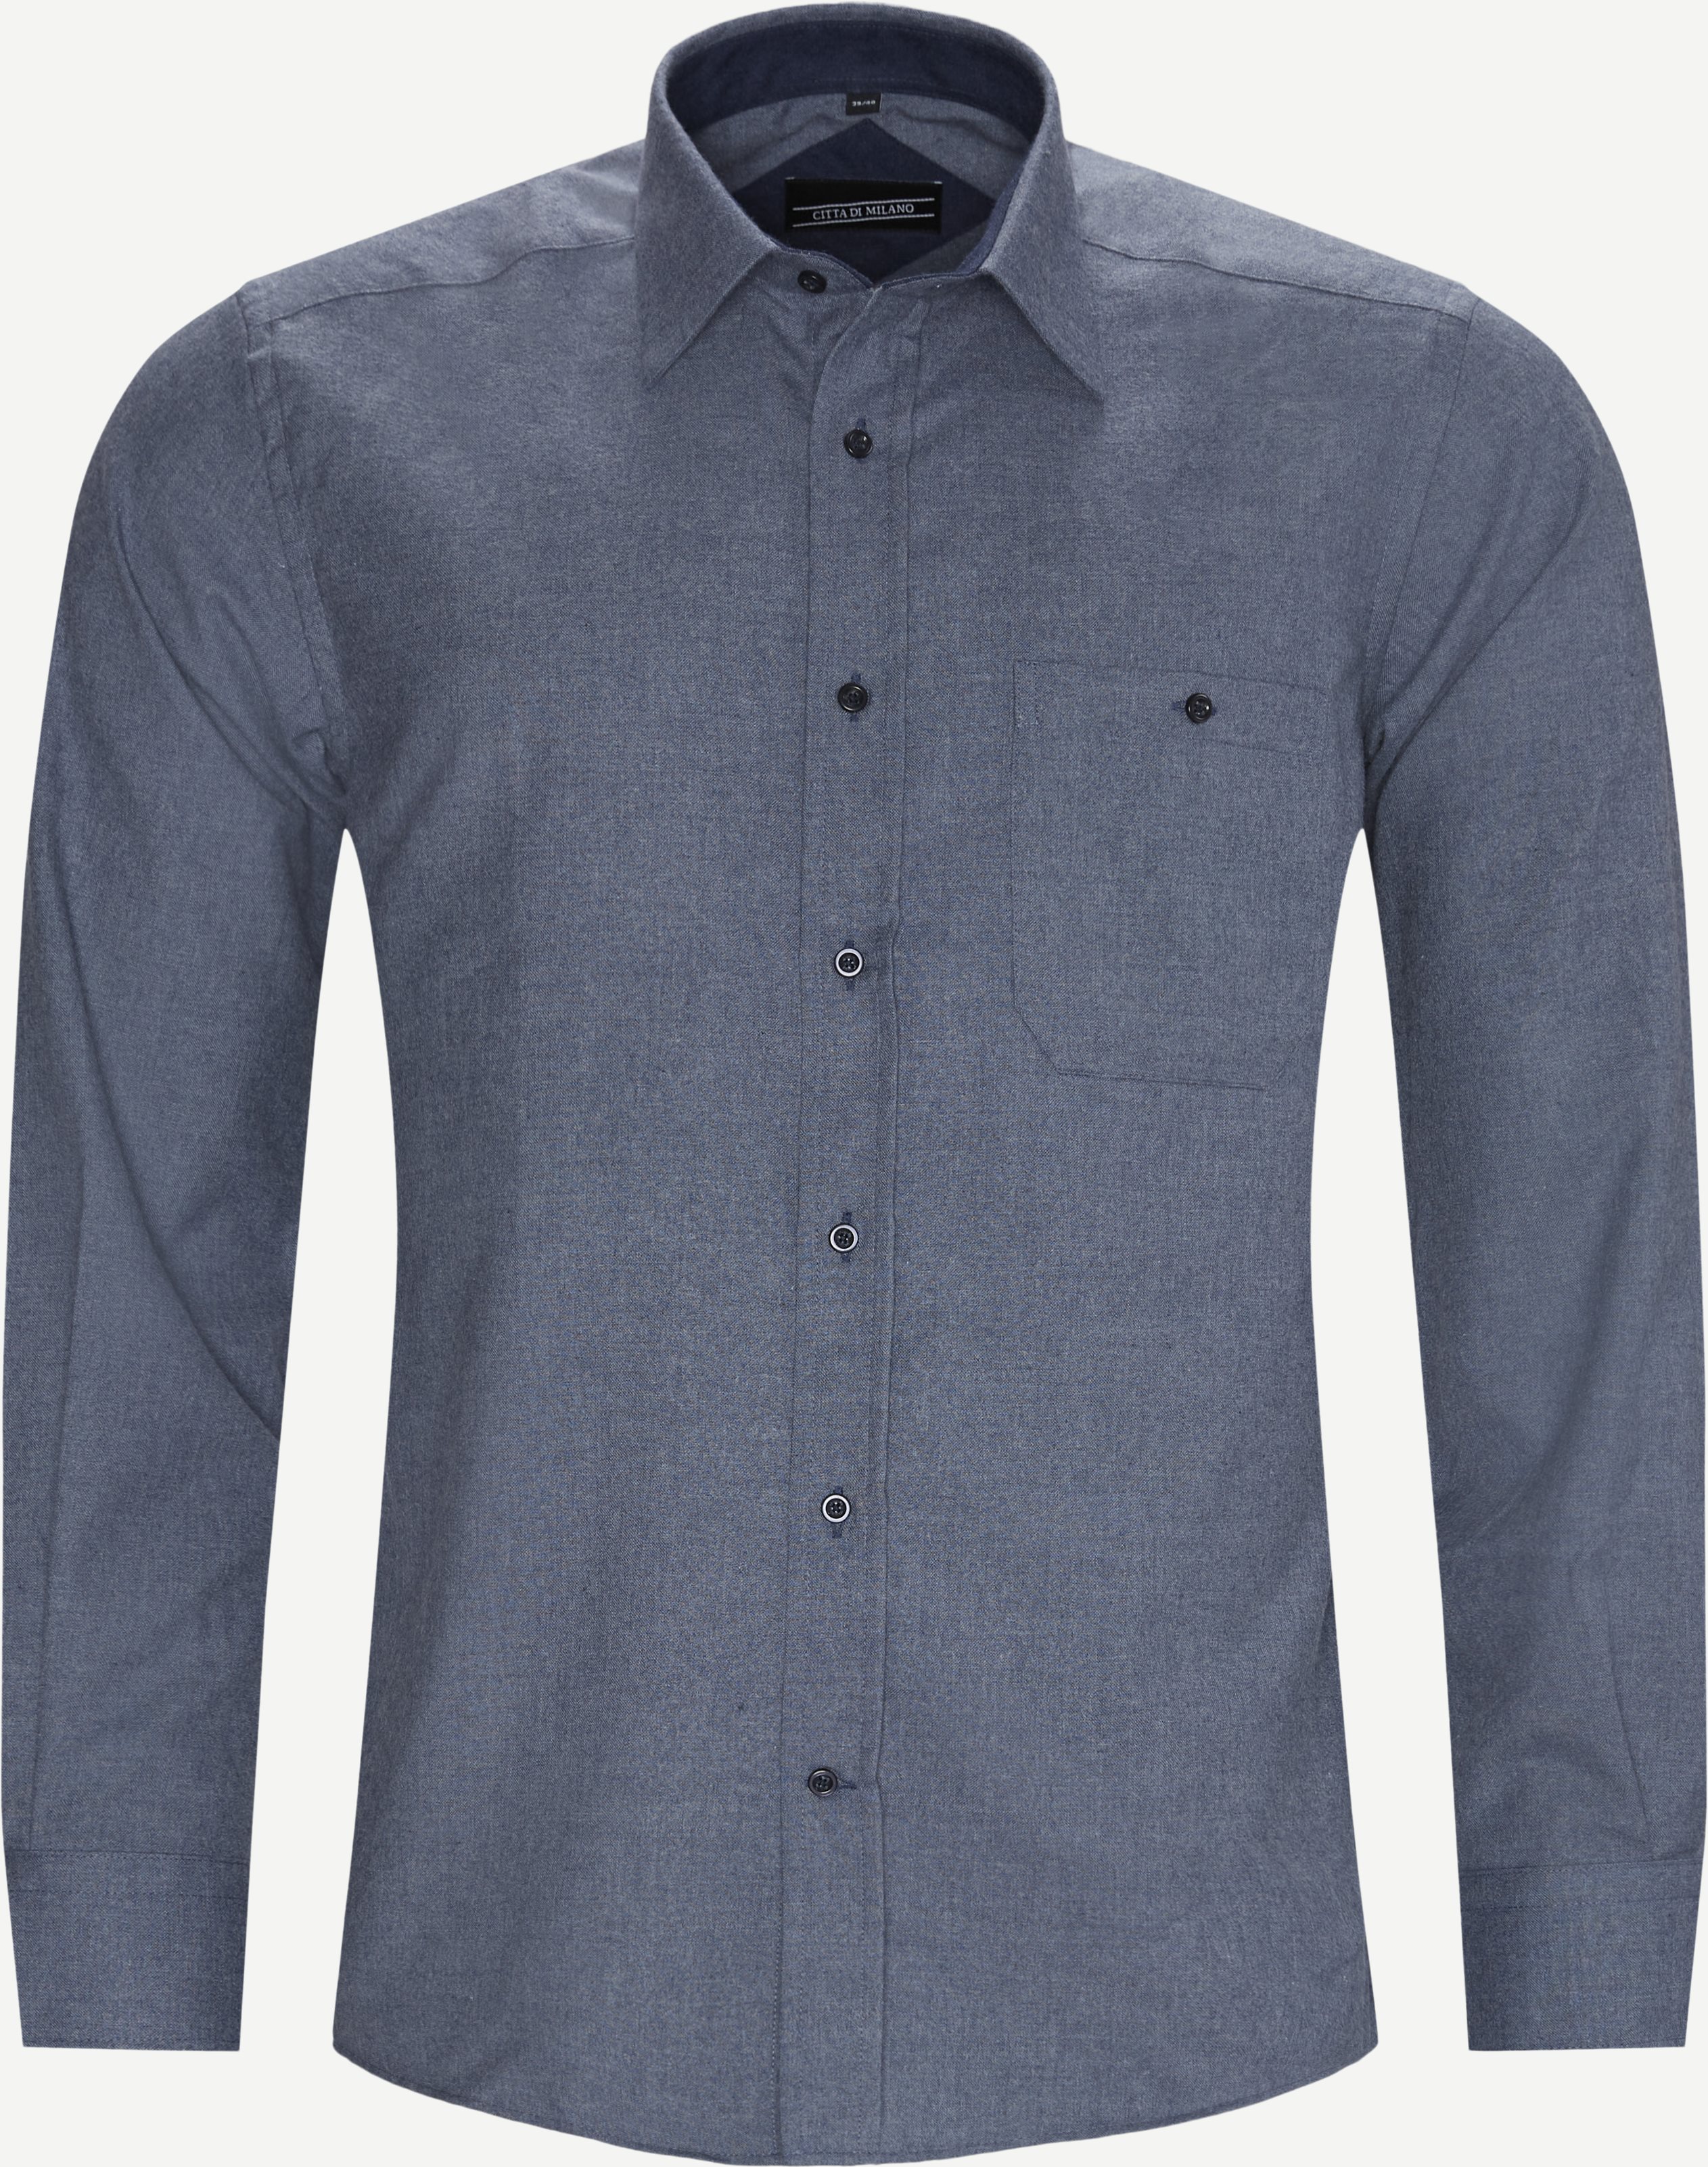 Panama Shirt - Shirts - Regular fit - Blue